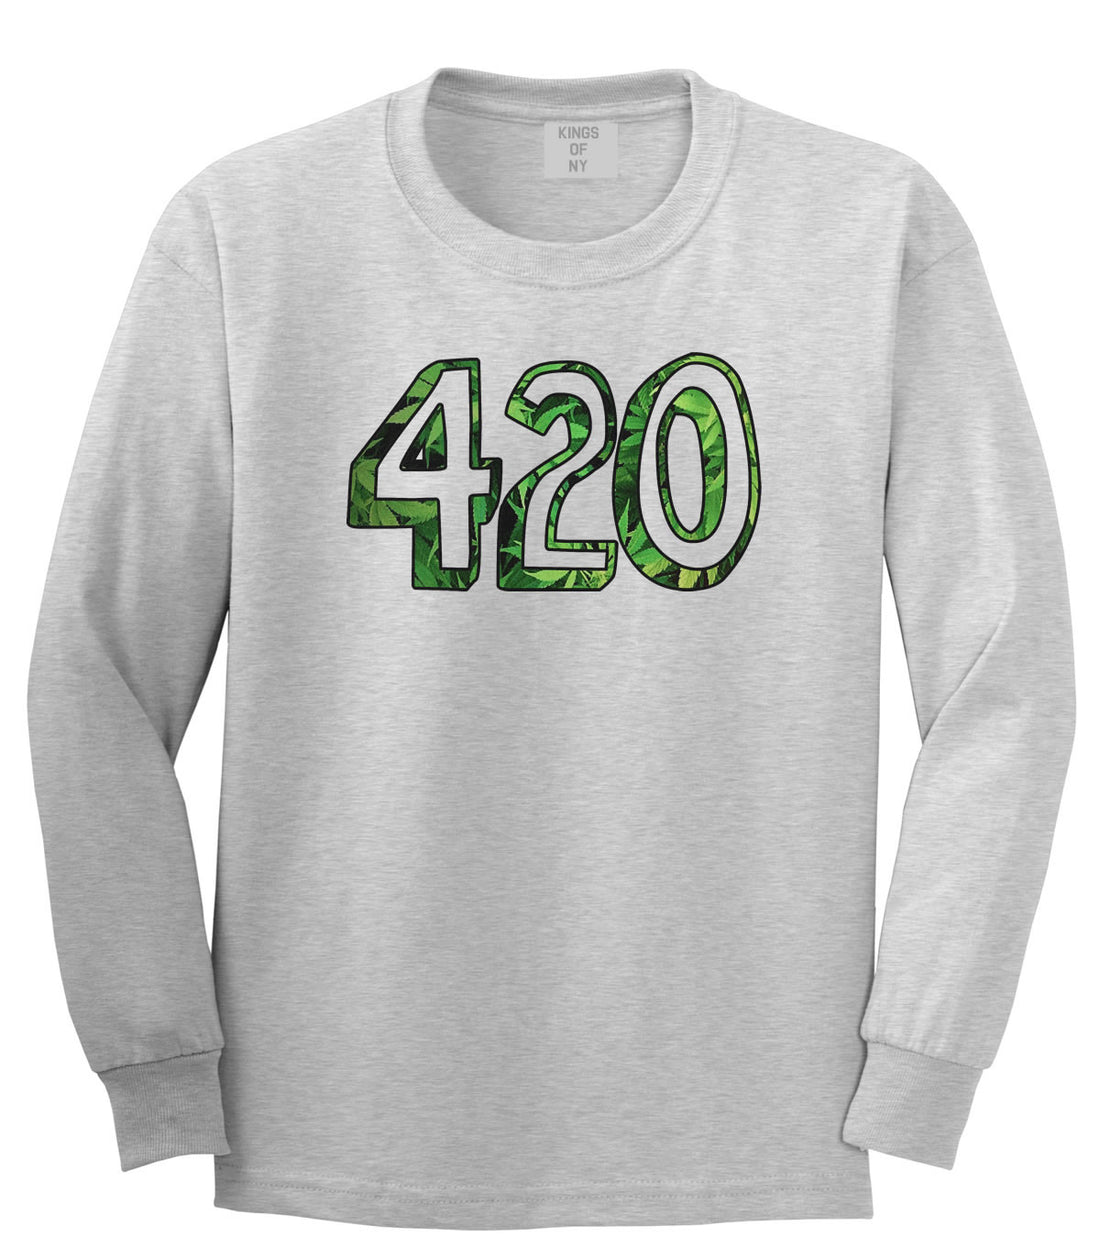  420 Weed Marijuana Print Boys Kids Long Sleeve T-Shirt in Grey by Kings Of NY